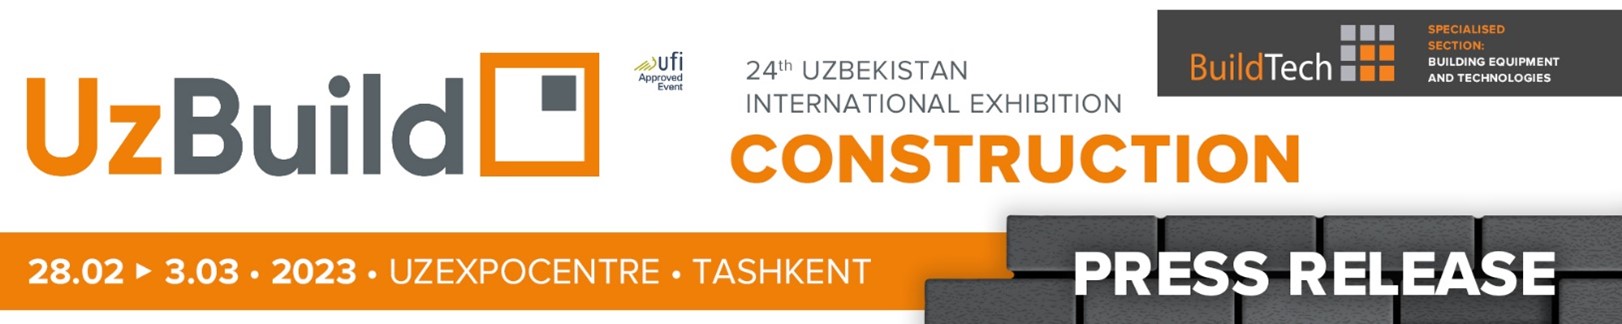 UzBuild: CONSTRUCTION - FROM IDEA TO IMPLEMENTATION